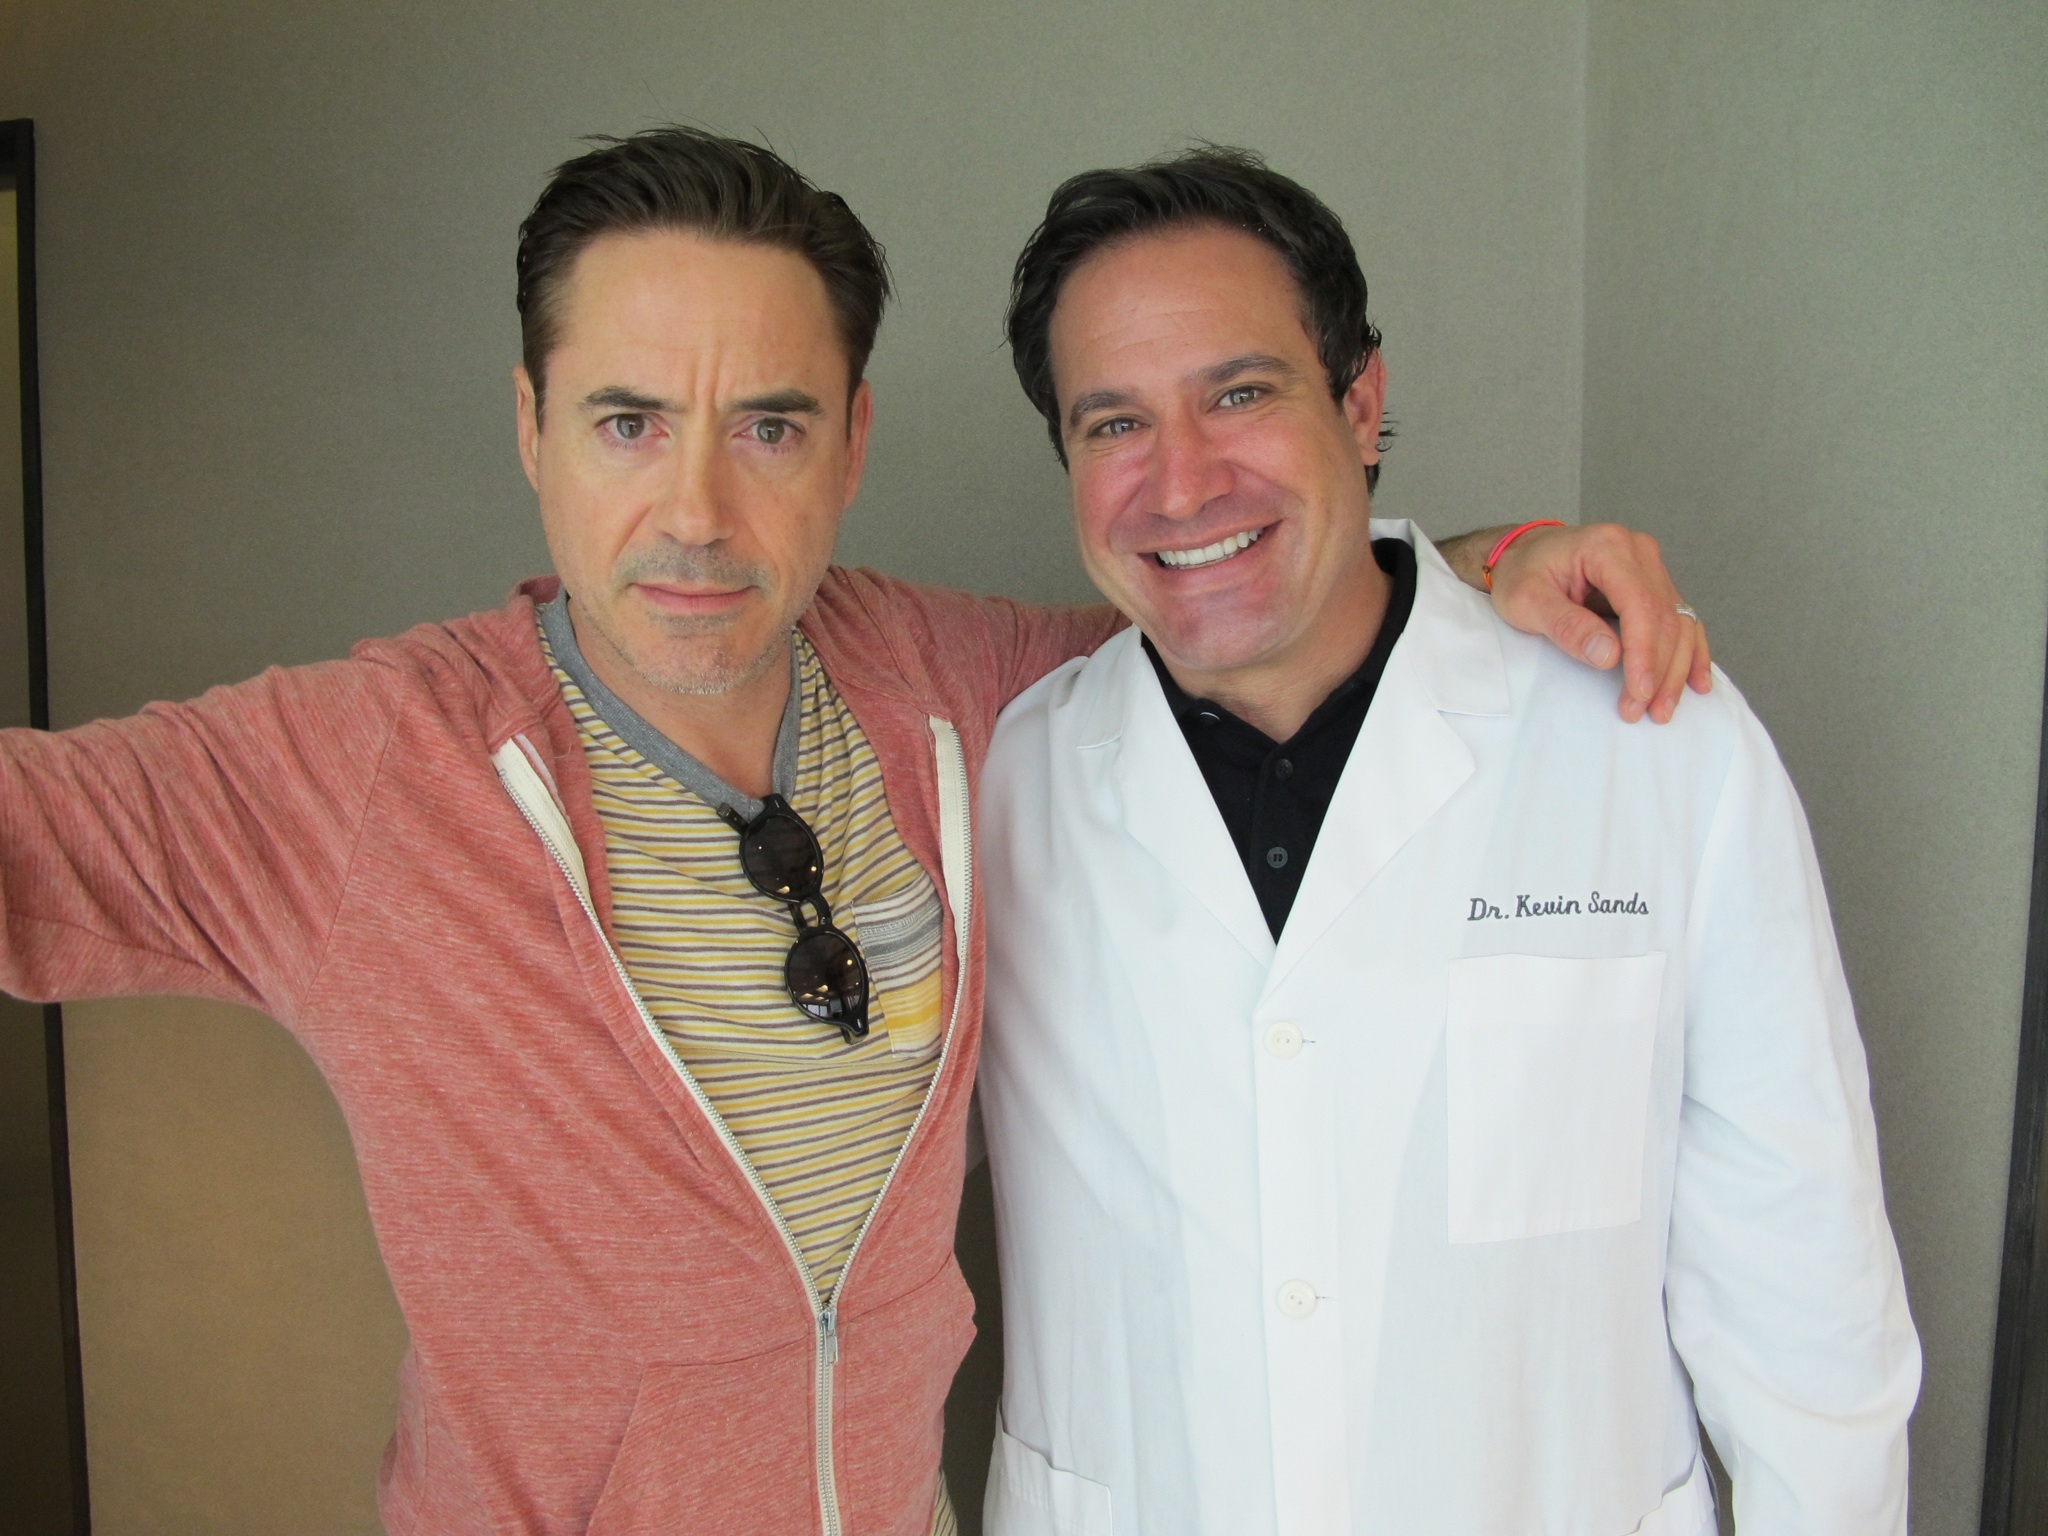 Dr. Kevin Sands with Robert Downey Jr.